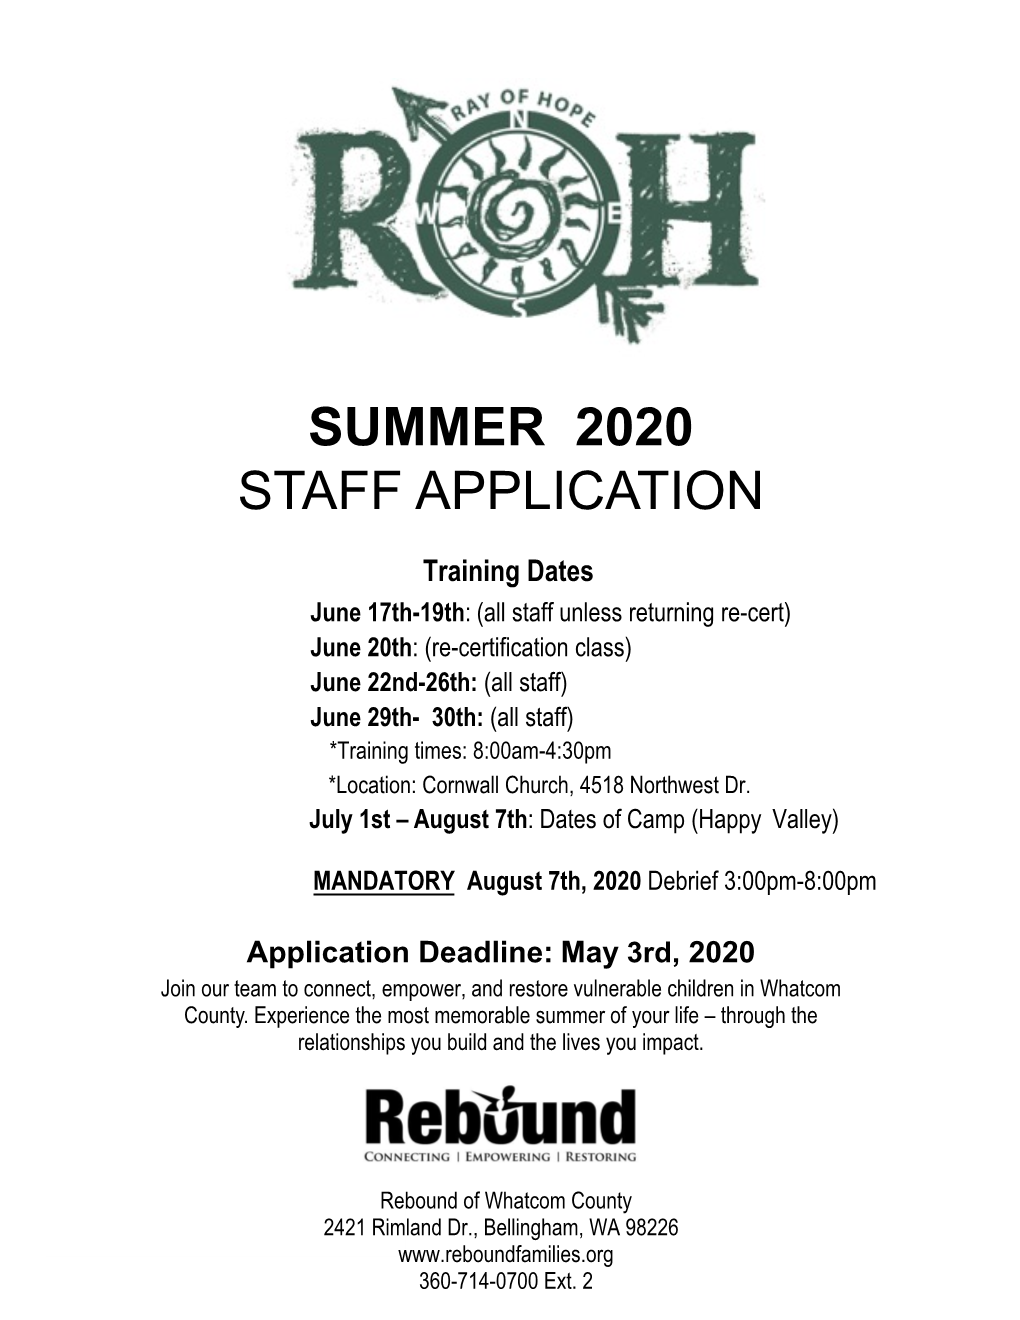 Summer 2020 Staff Application